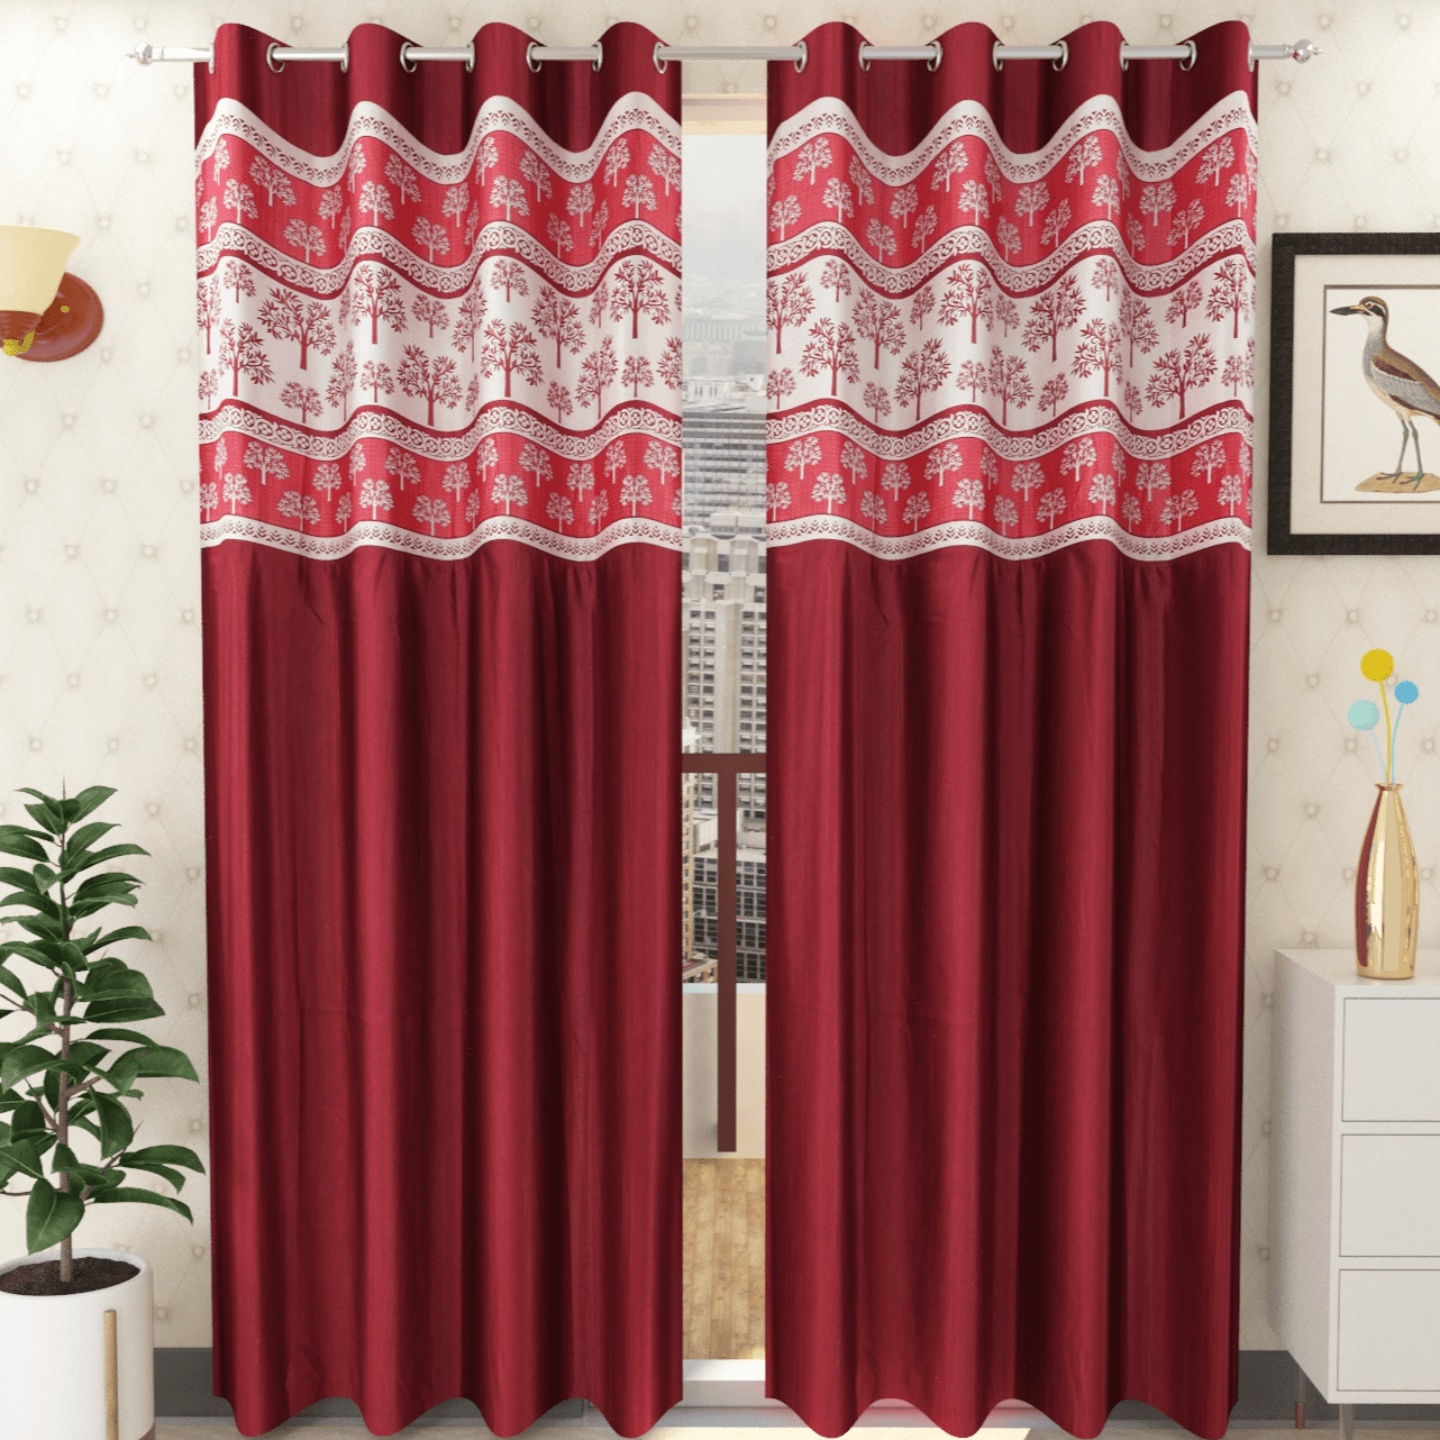 Handtex Home Tree design Patchwork curtain for door 9 feet set of 2pc Maroon color